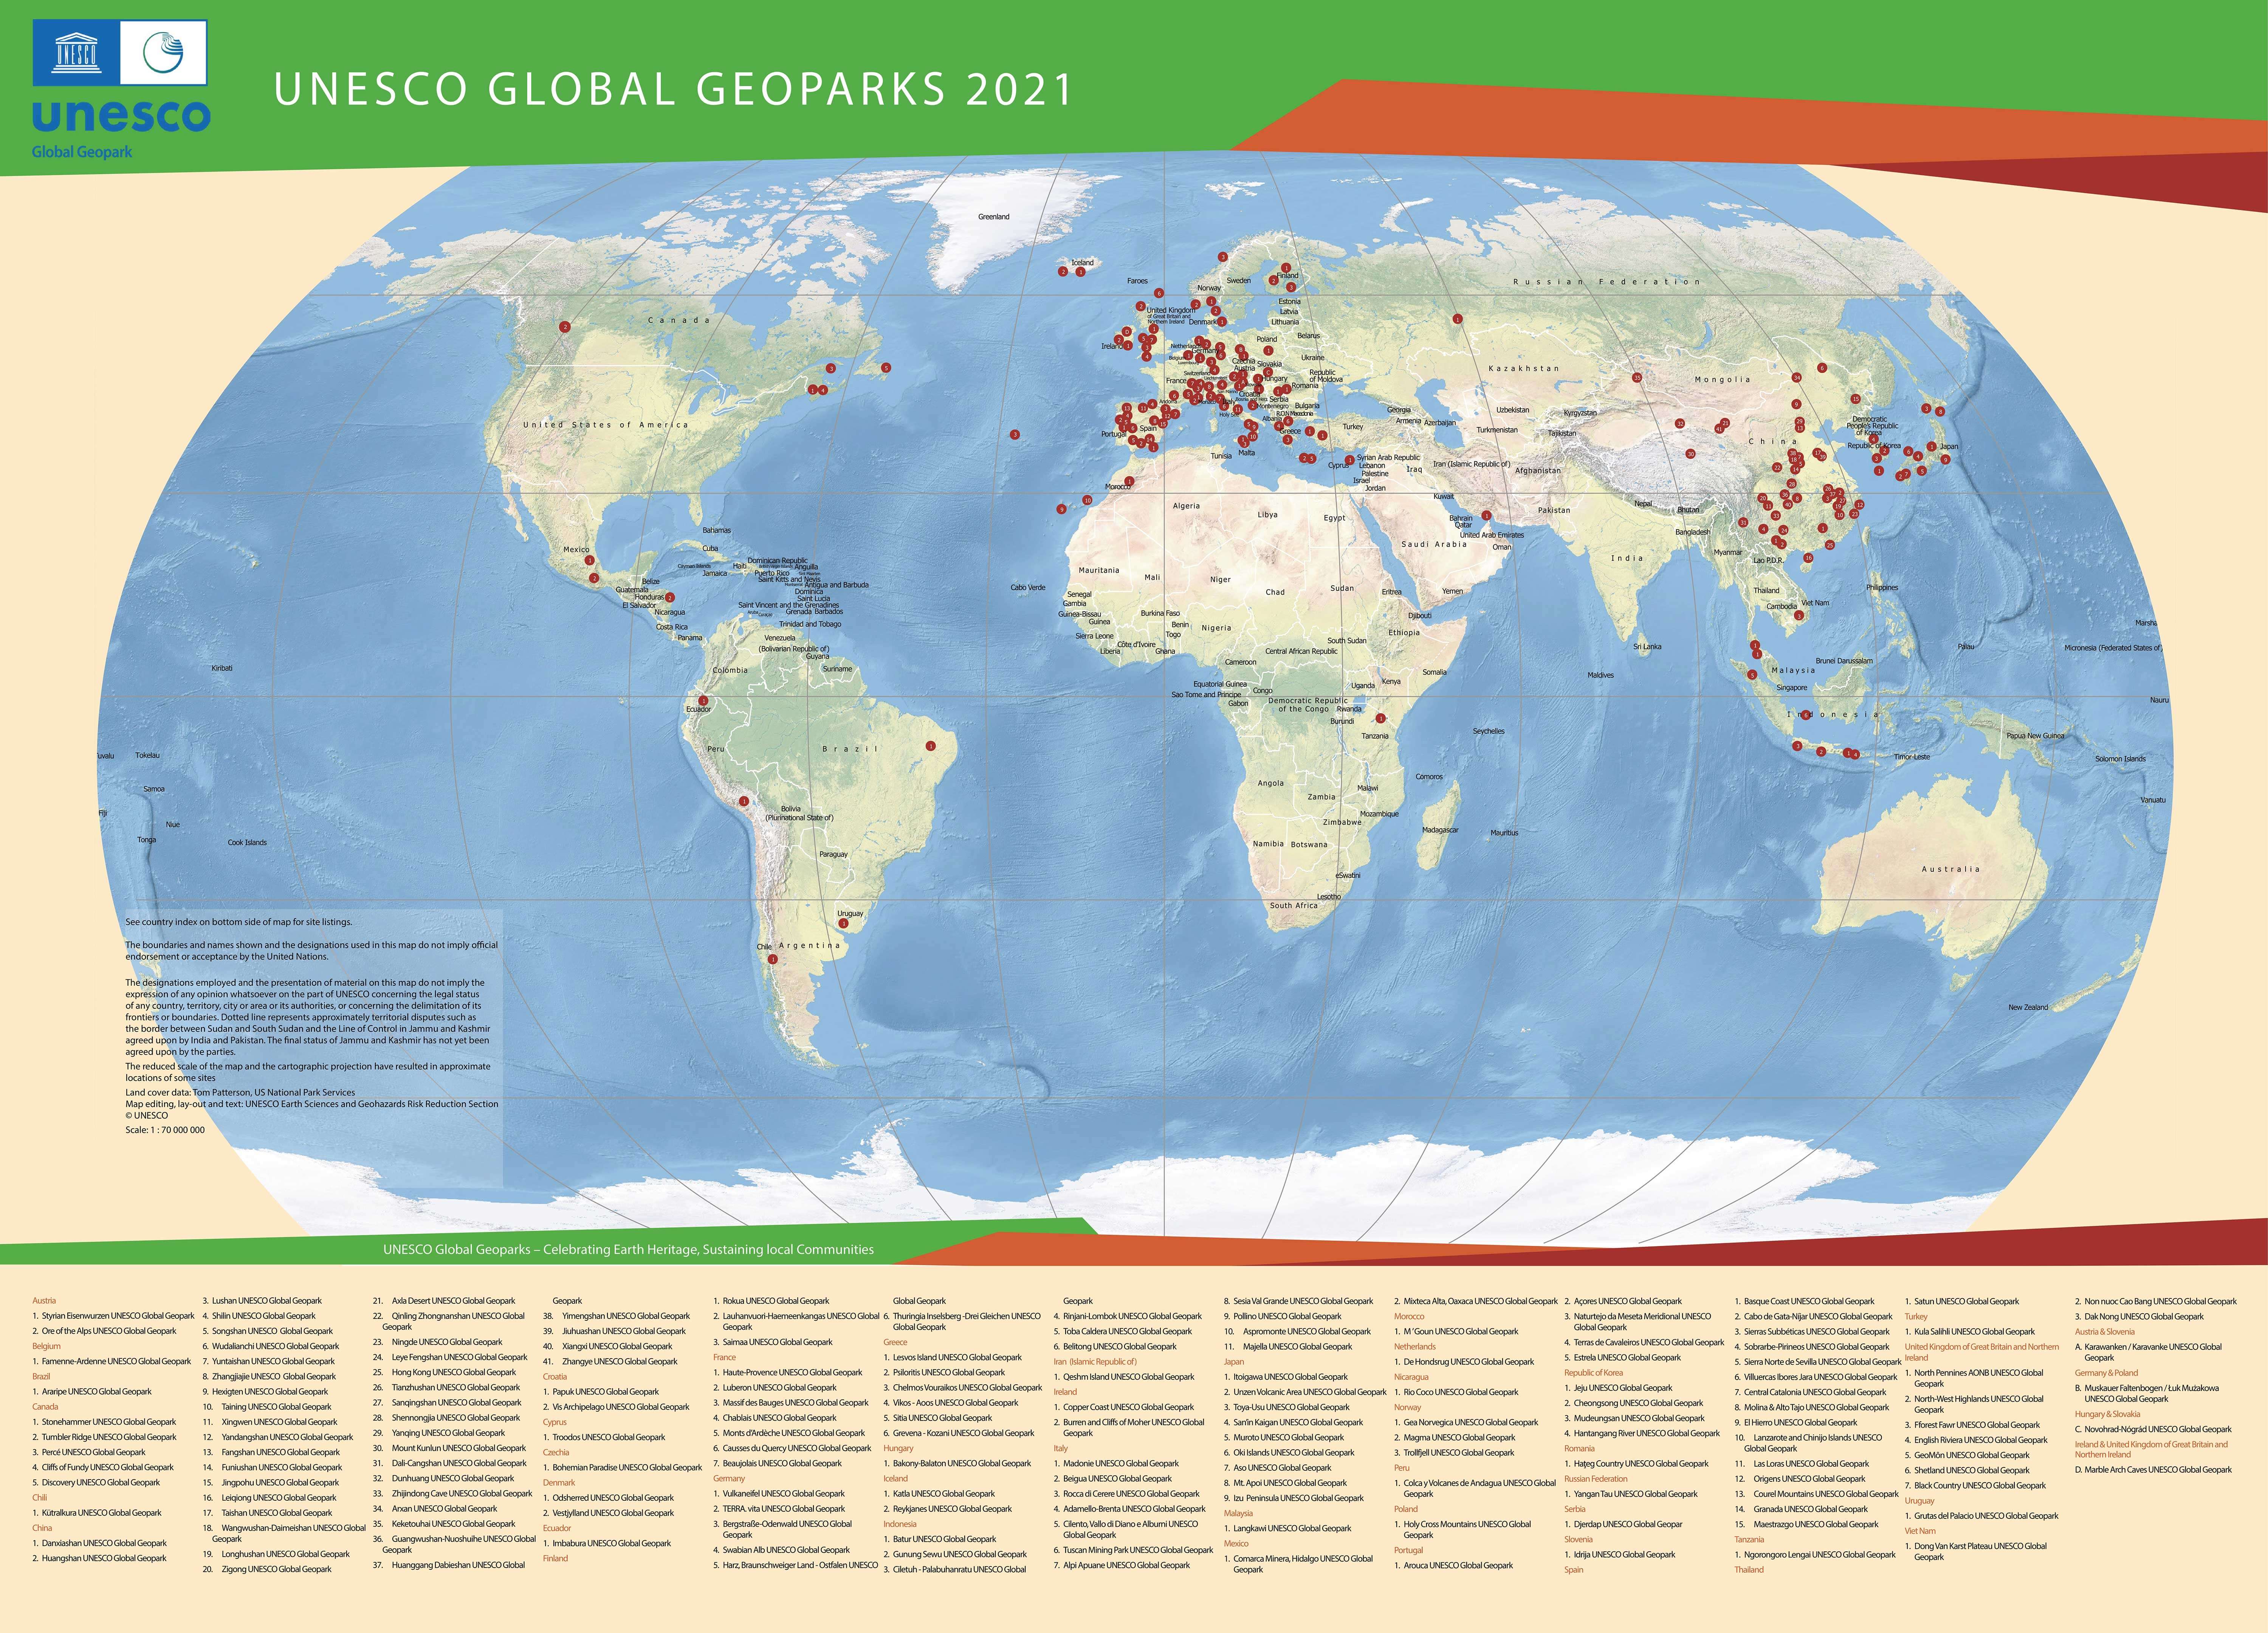 UNESCO Global Geopark